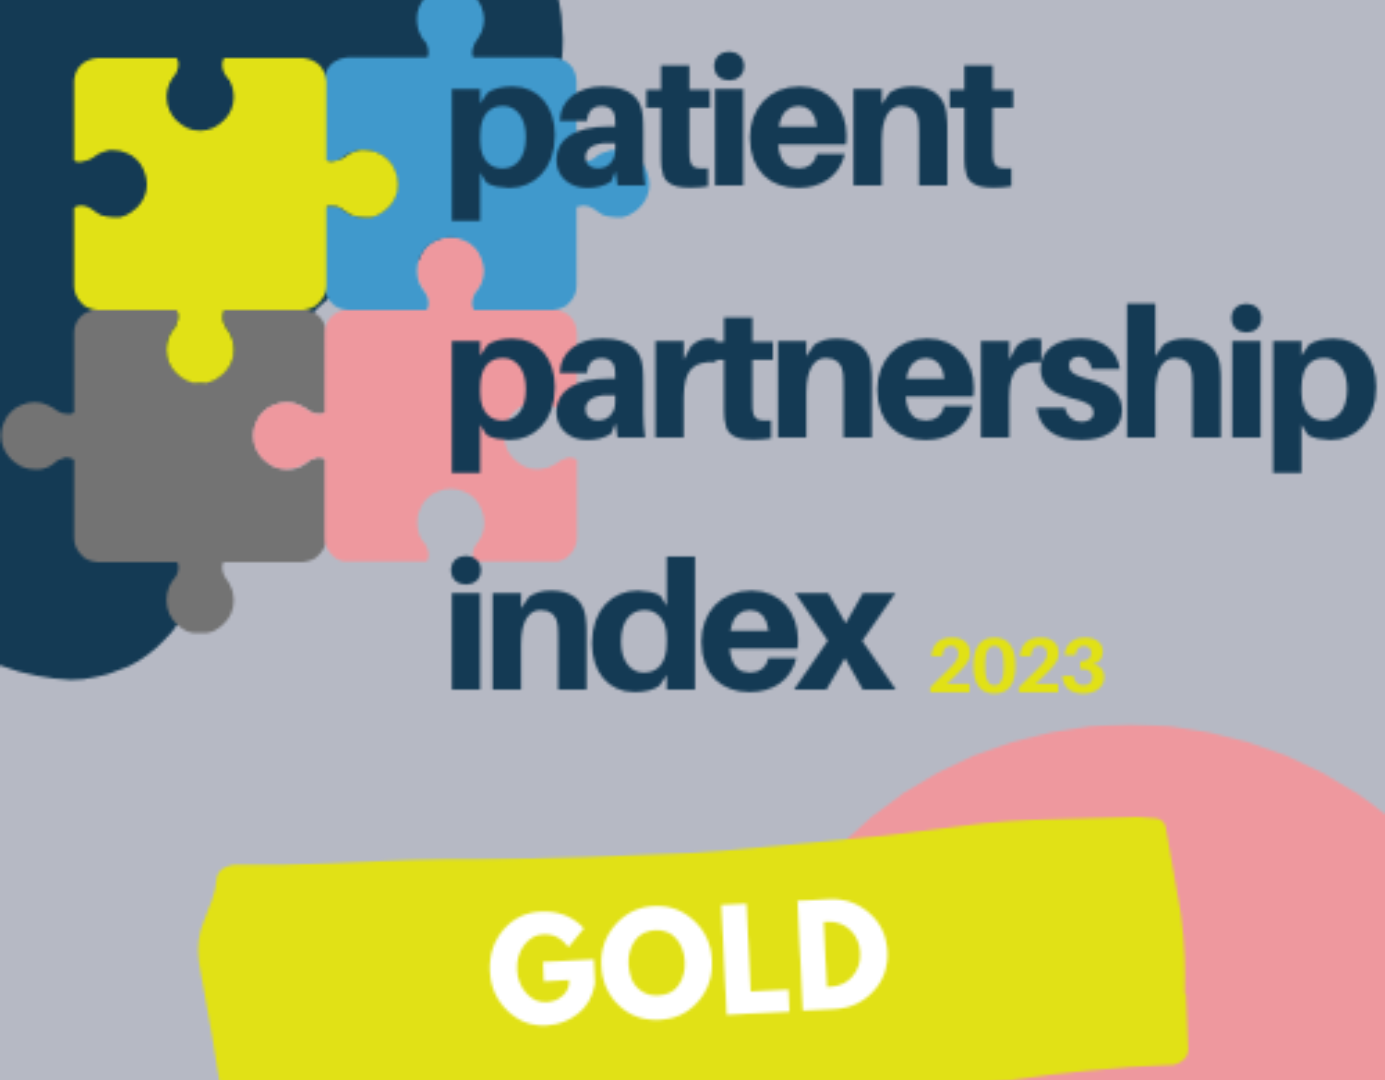 Patient partnership index logo 